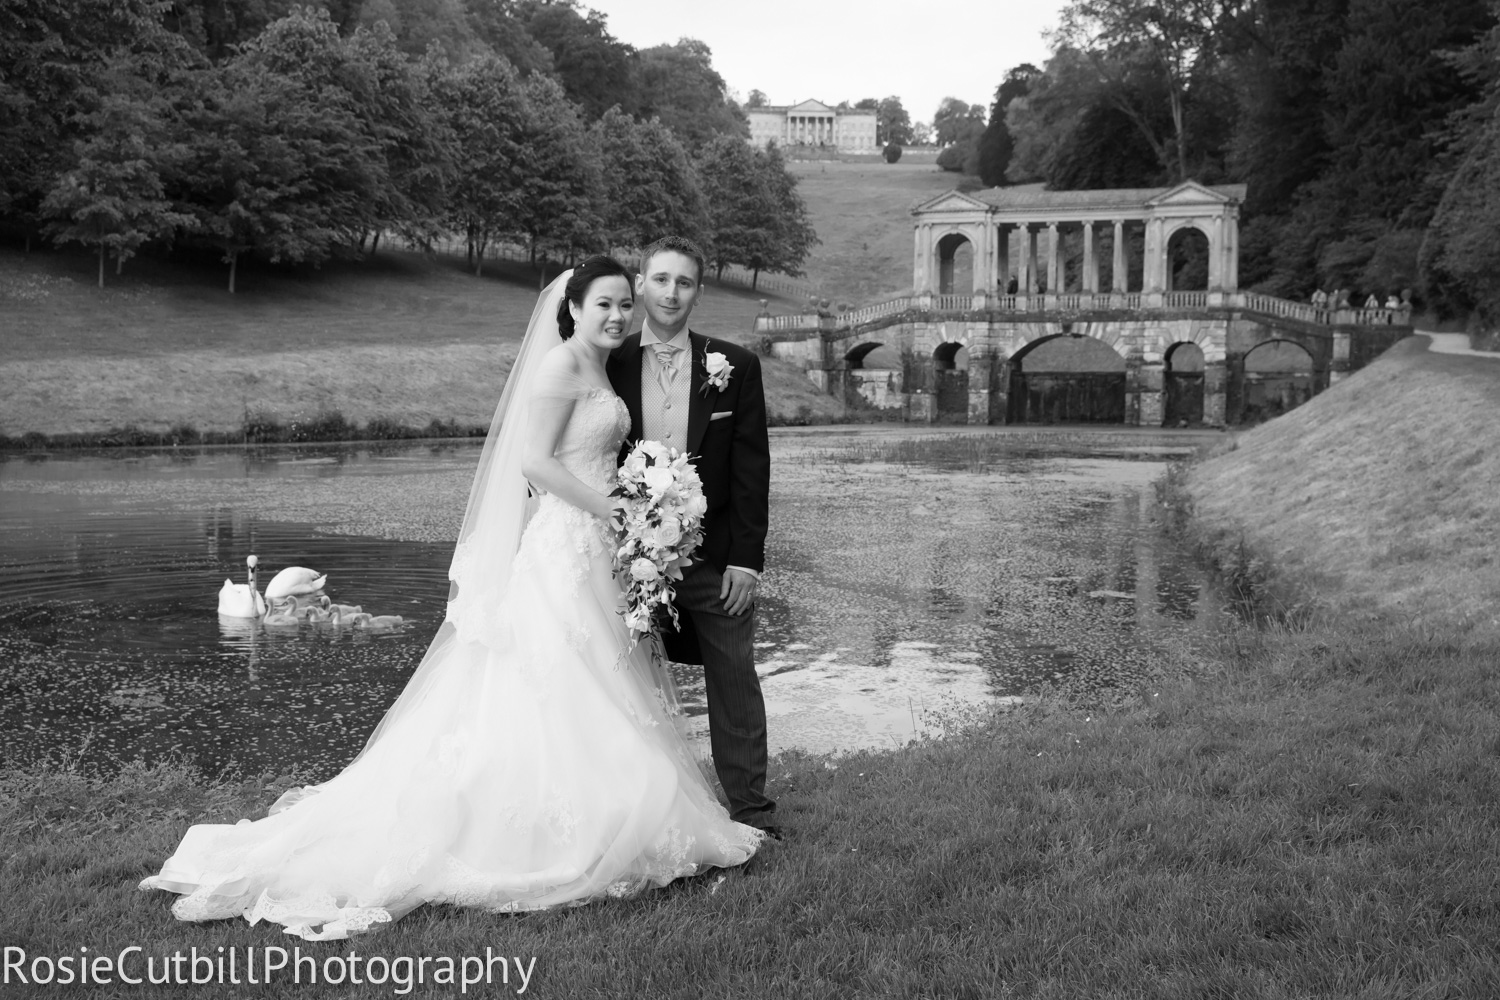 Wedding blog bamboozled by photography styles photographers help classic style photograph